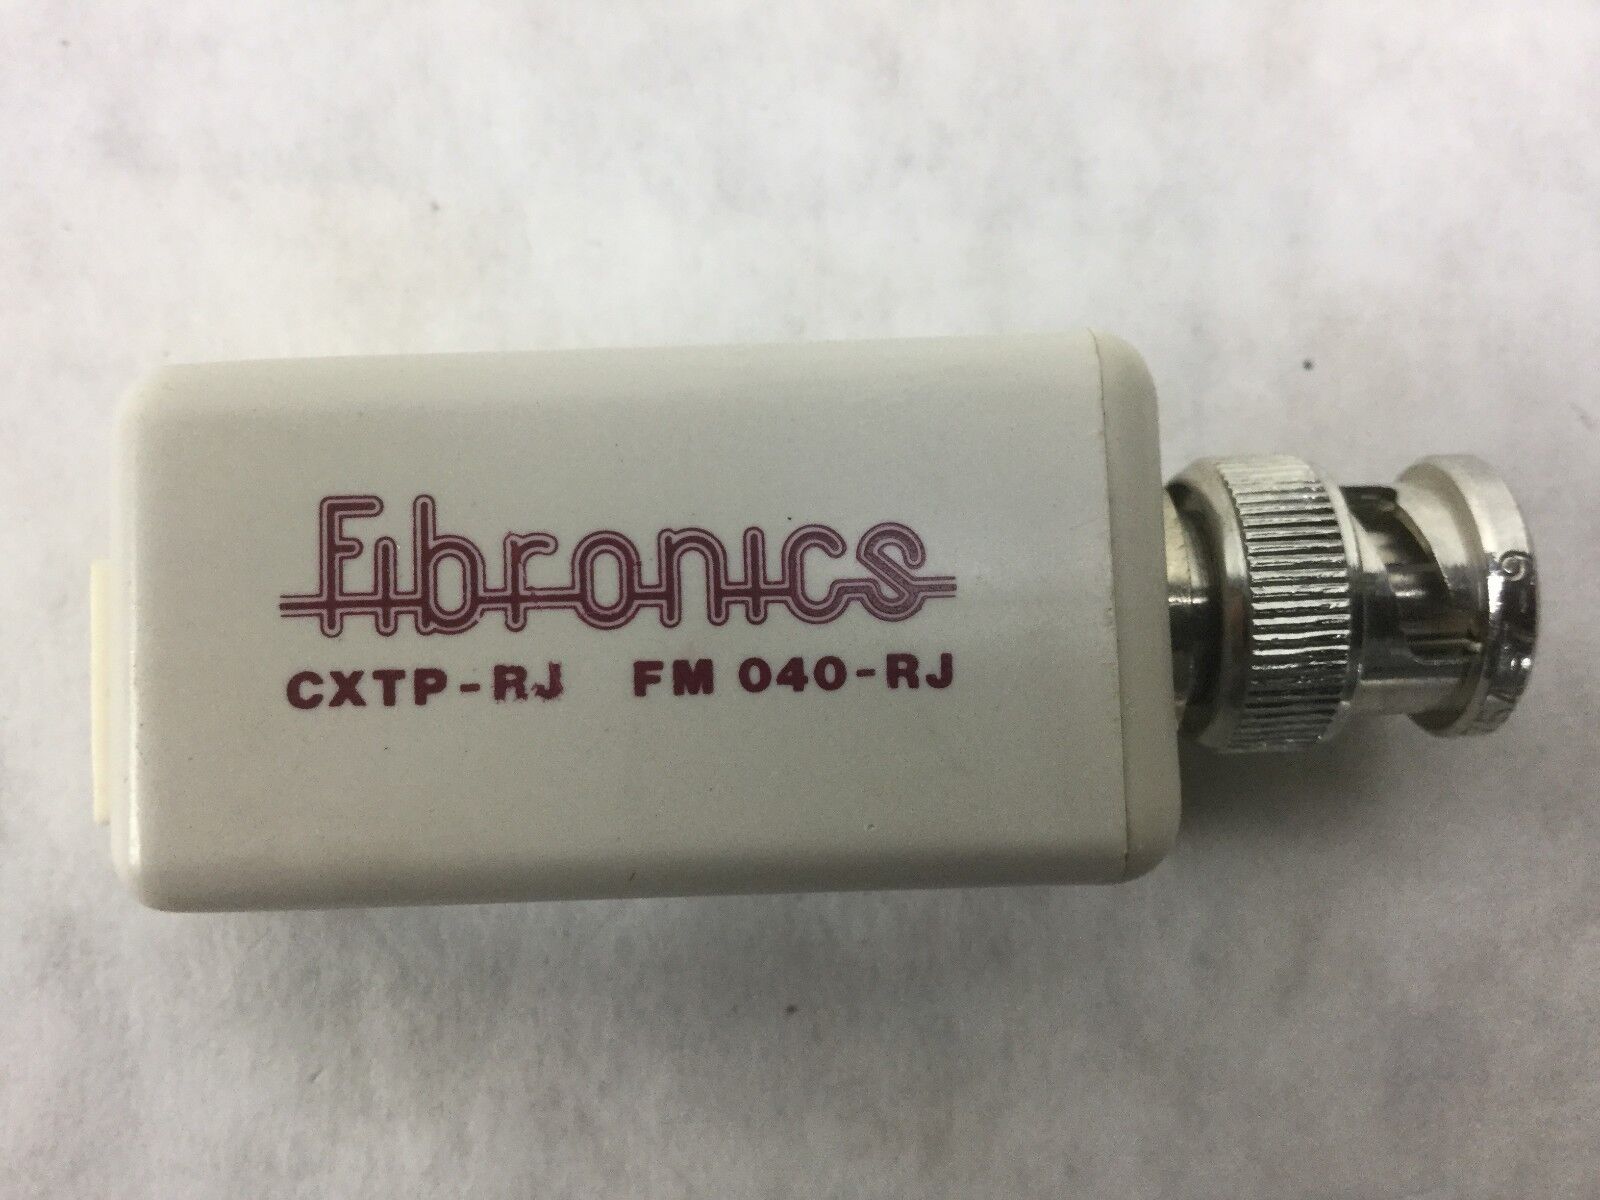 Fibronics Network Adapter FM040-RJM-R3846 007